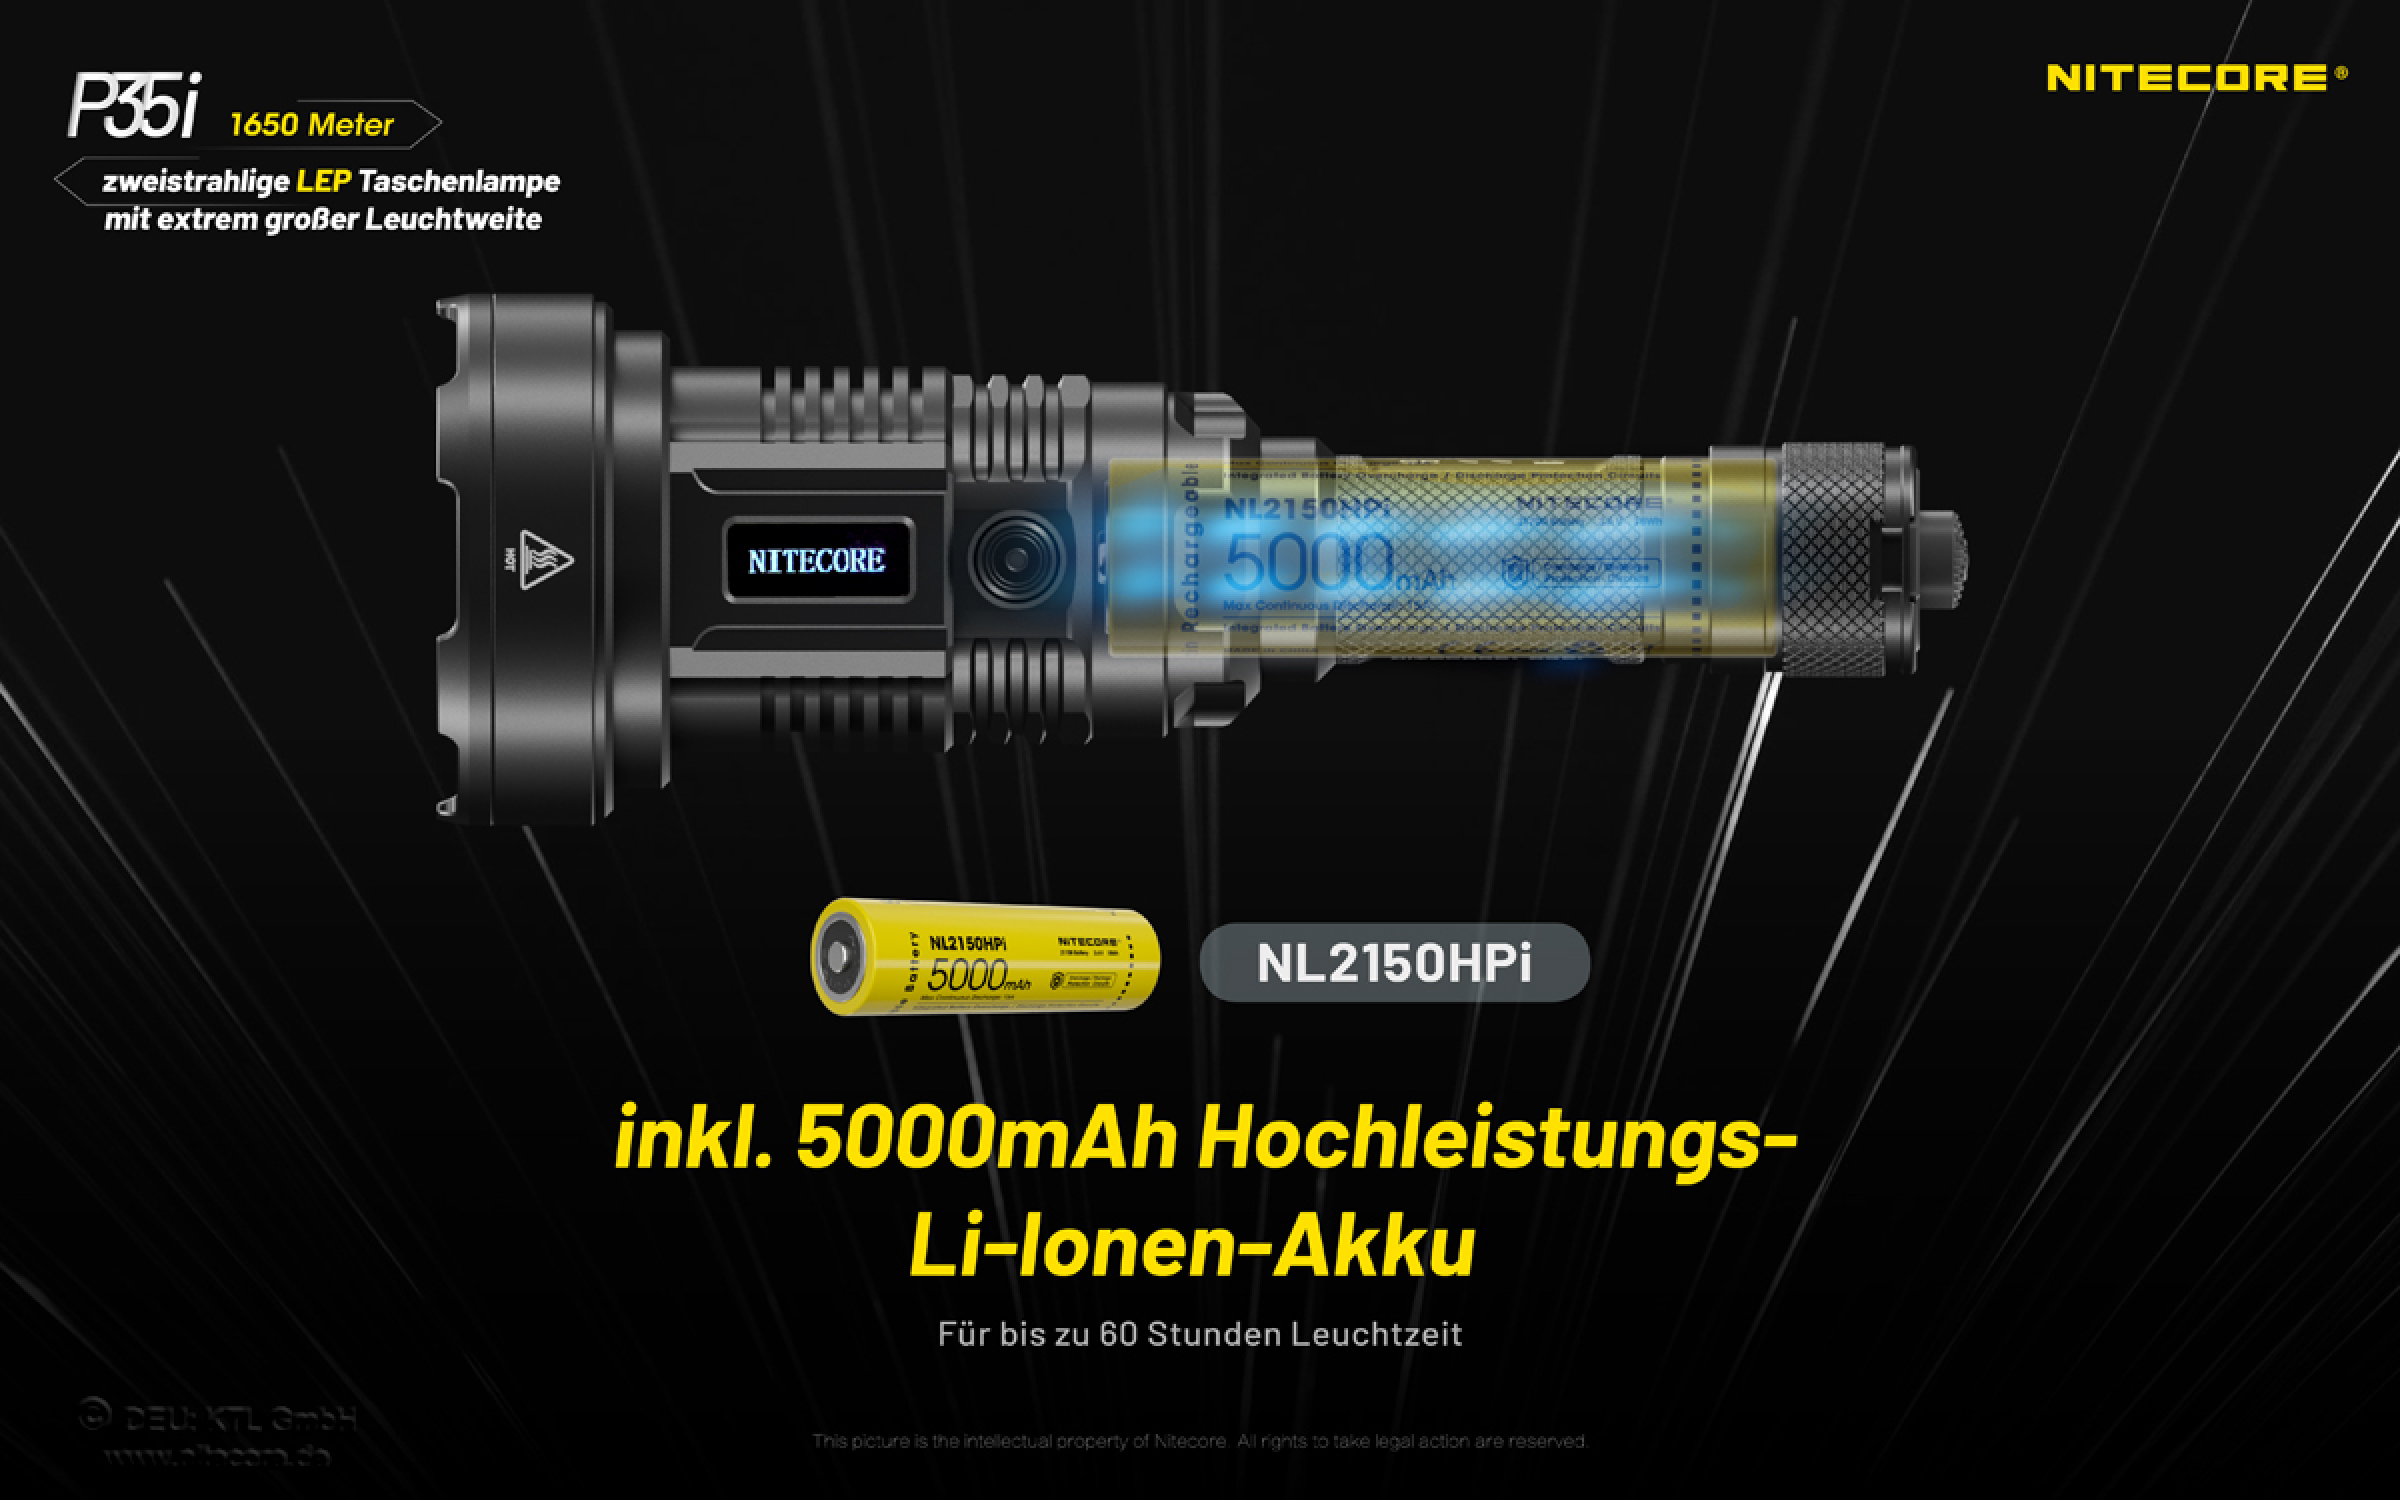 Nitecore Pro Flashlight P35i - LED & Laser light